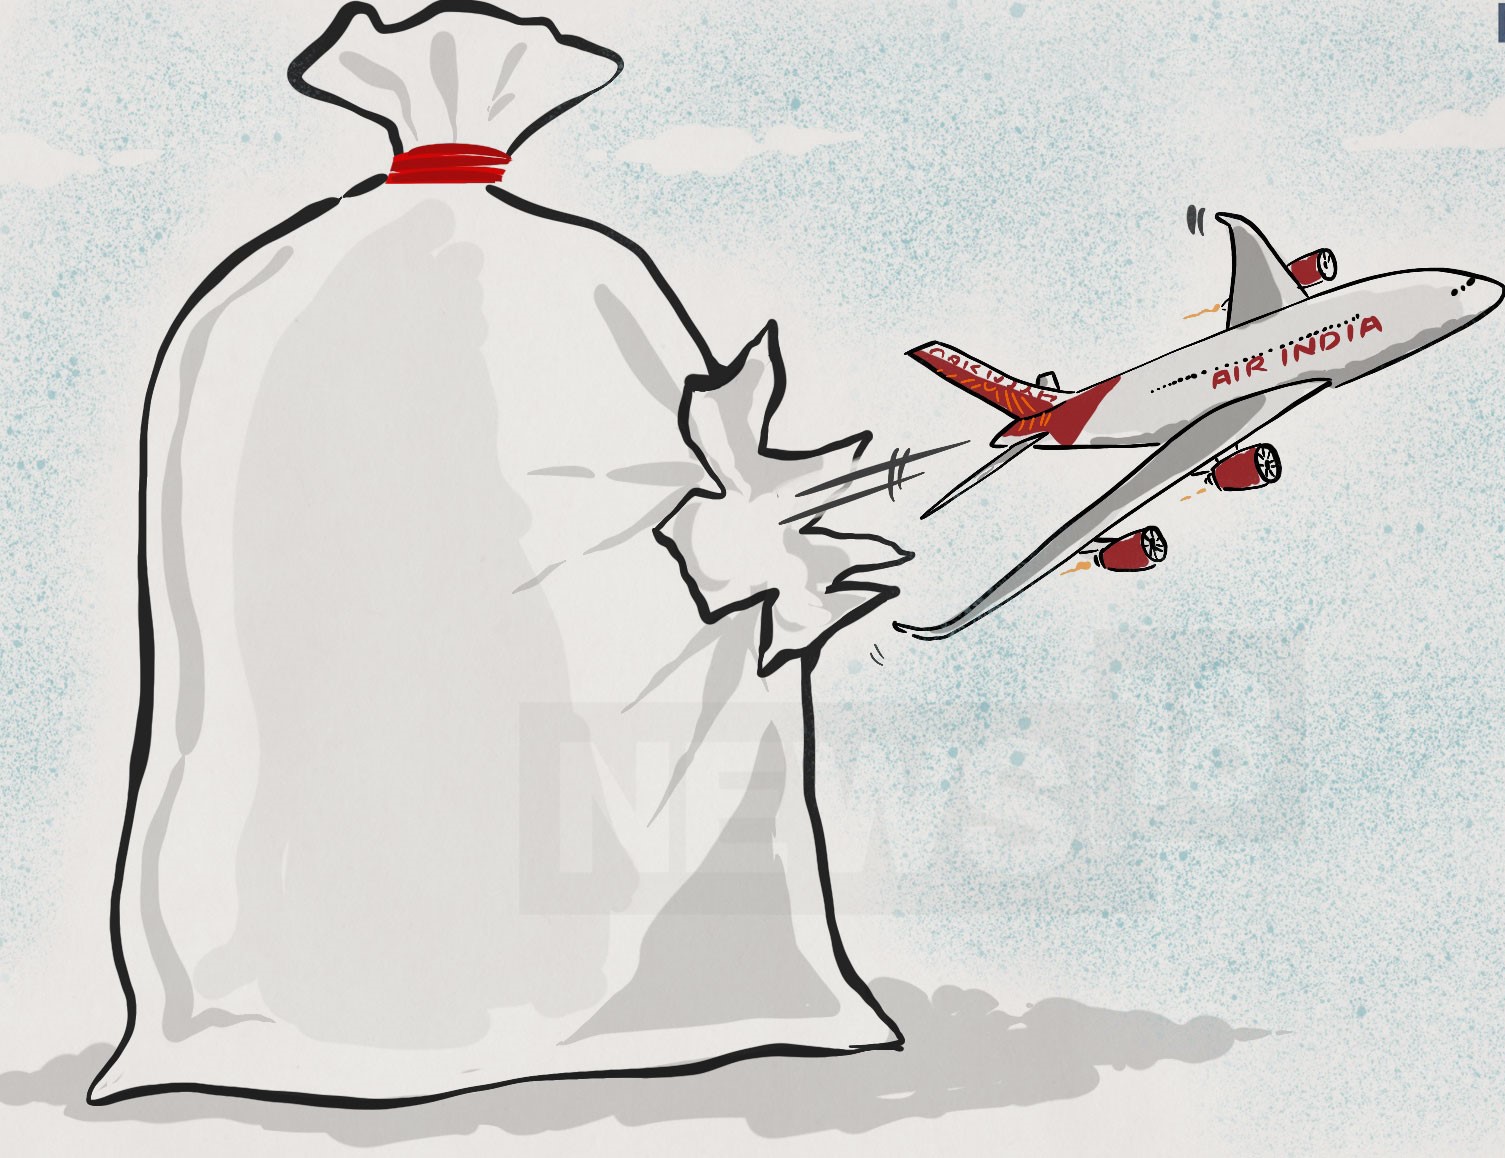 Air-India-Plastic-Ban-Cartoon.jpg